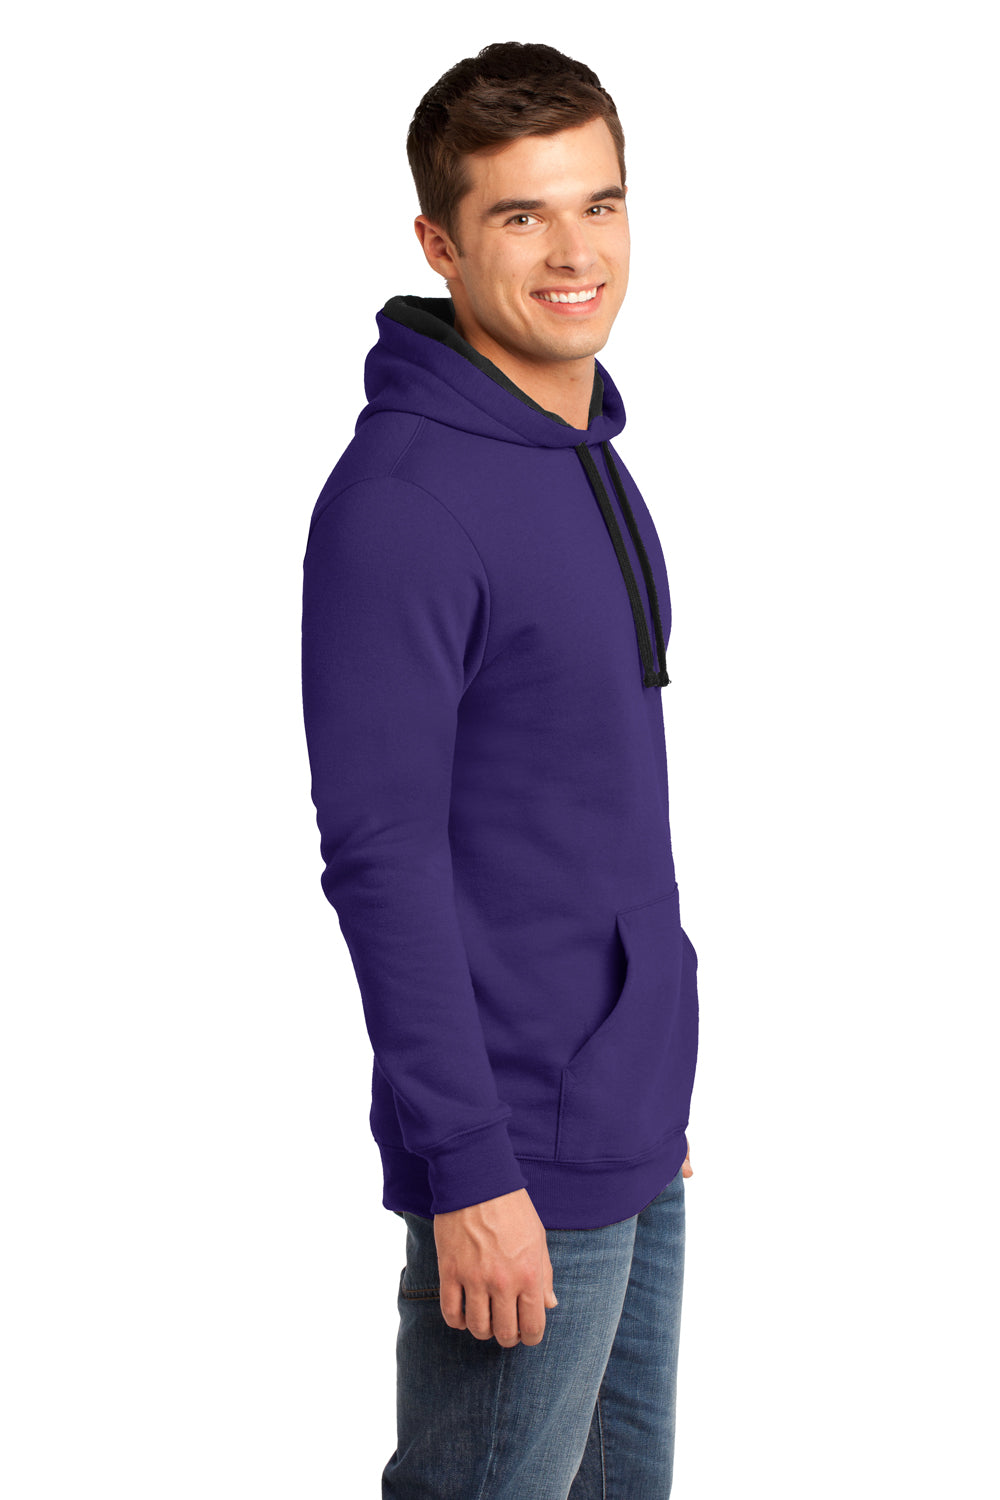 District DT810 Mens The Concert Fleece Hooded Sweatshirt Hoodie Purple Side